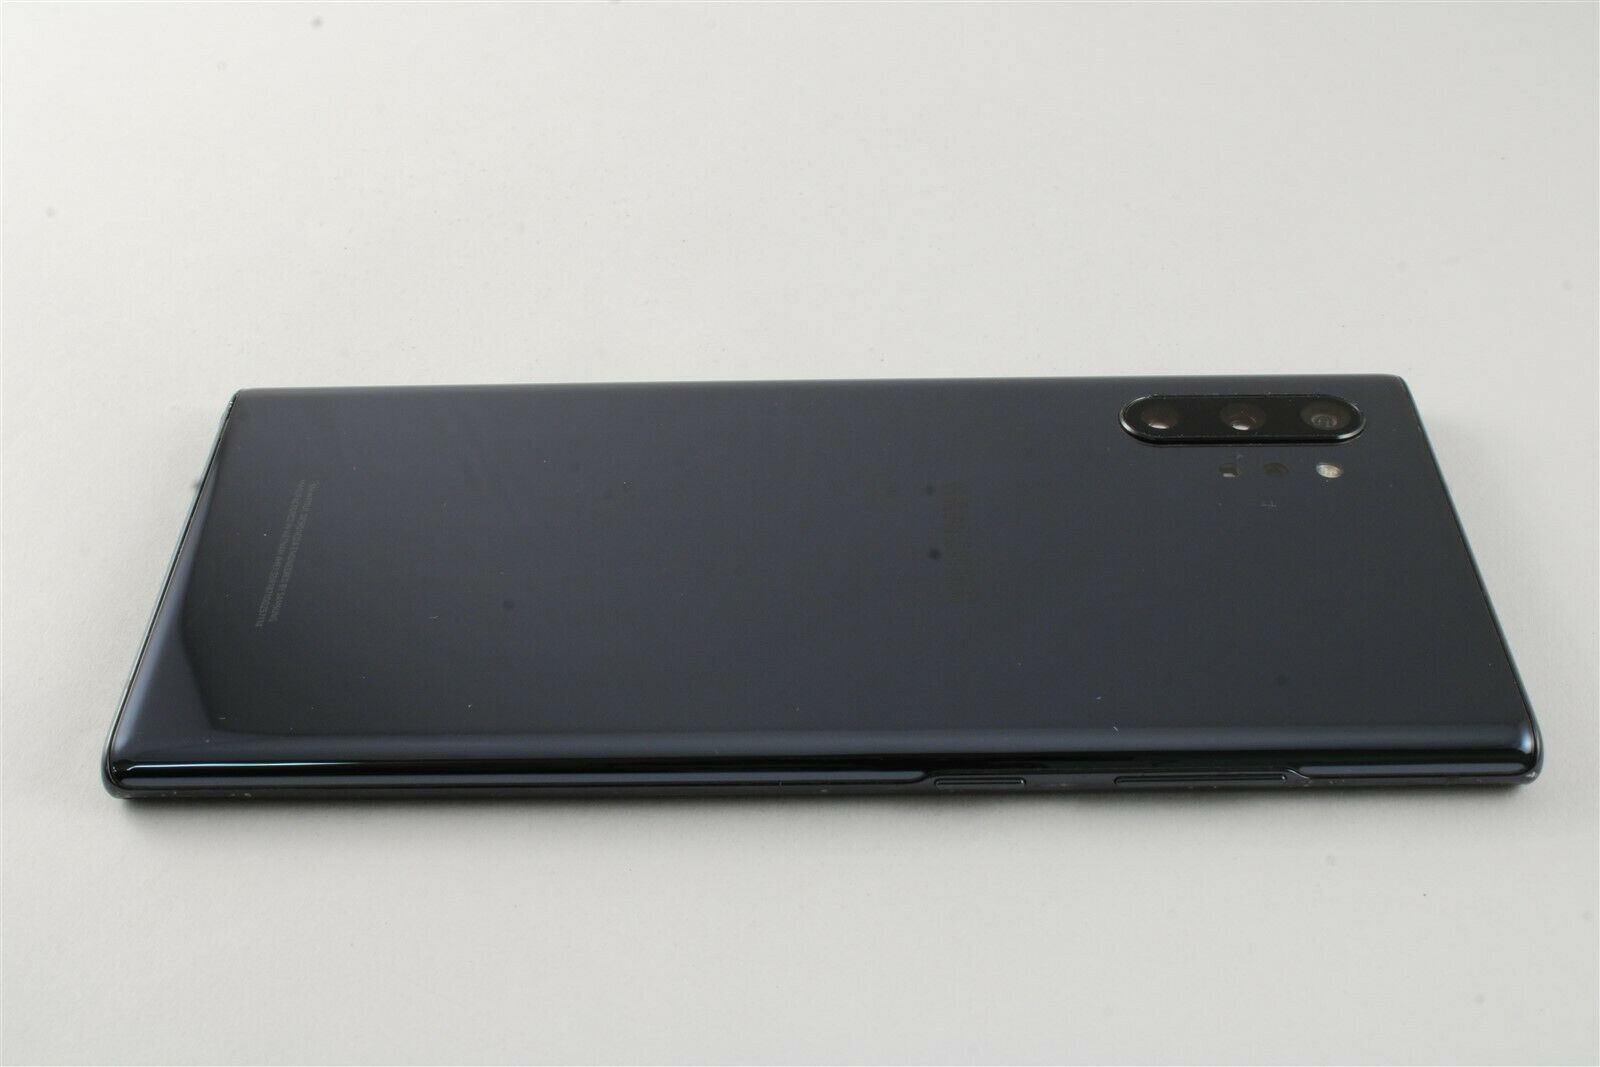  Samsung Galaxy Note 10+ Plus (256GB, 12GB) 6.8 QHD+ AMOLED,  Snapdragon 855, 4300mAh Battery, 4G LTE Fully Unlocked (T-Mobile, Verizon,  Global) N975U1 (w/Wireless Charger Pad, Aura Glow)